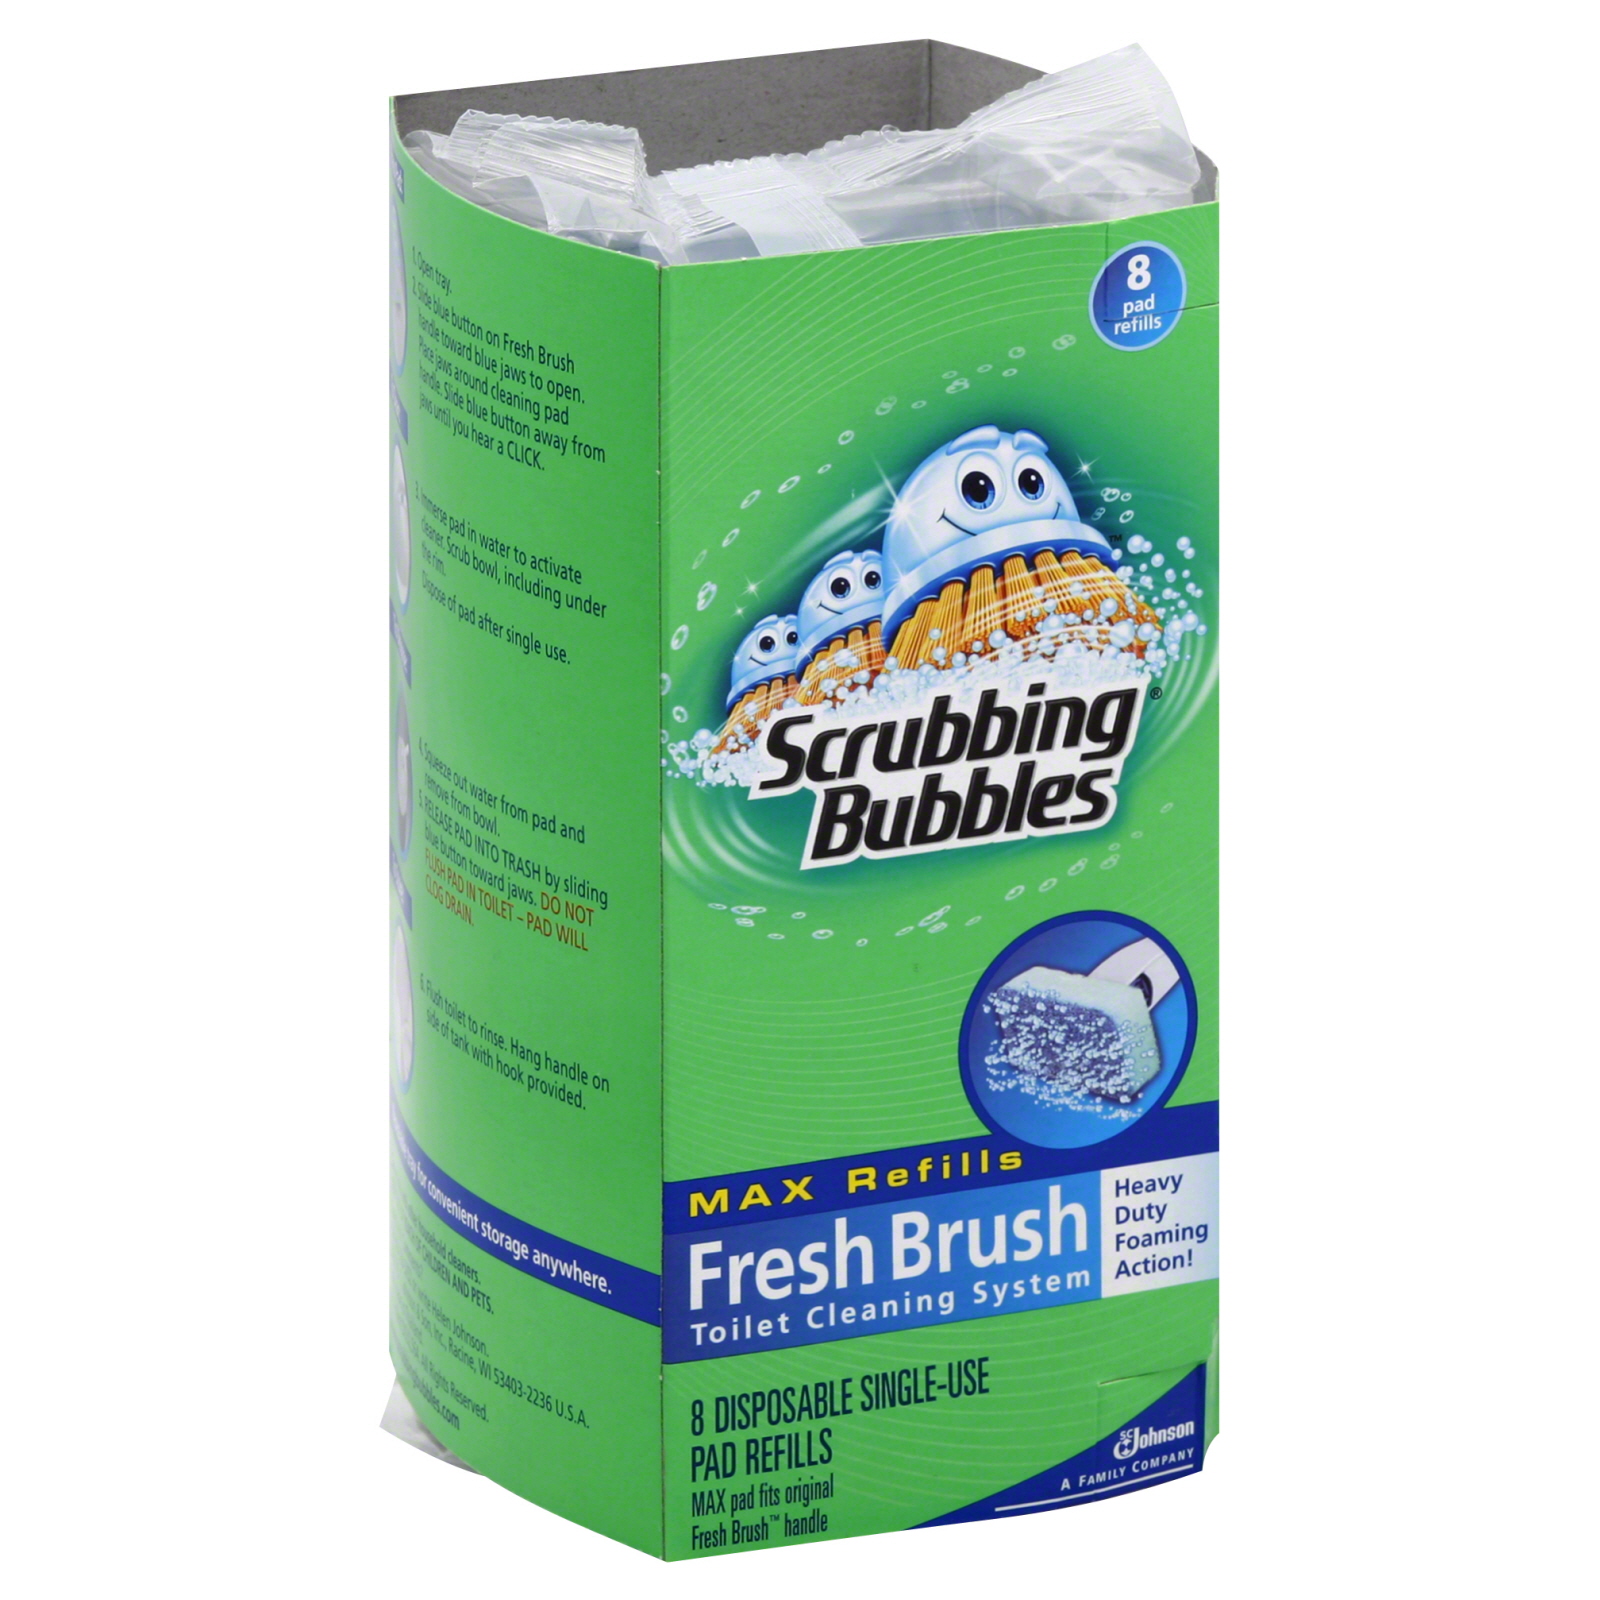 Scrubbing Bubbles Fresh Brush Max Toilet Cleaning System, Refills, 8 refills